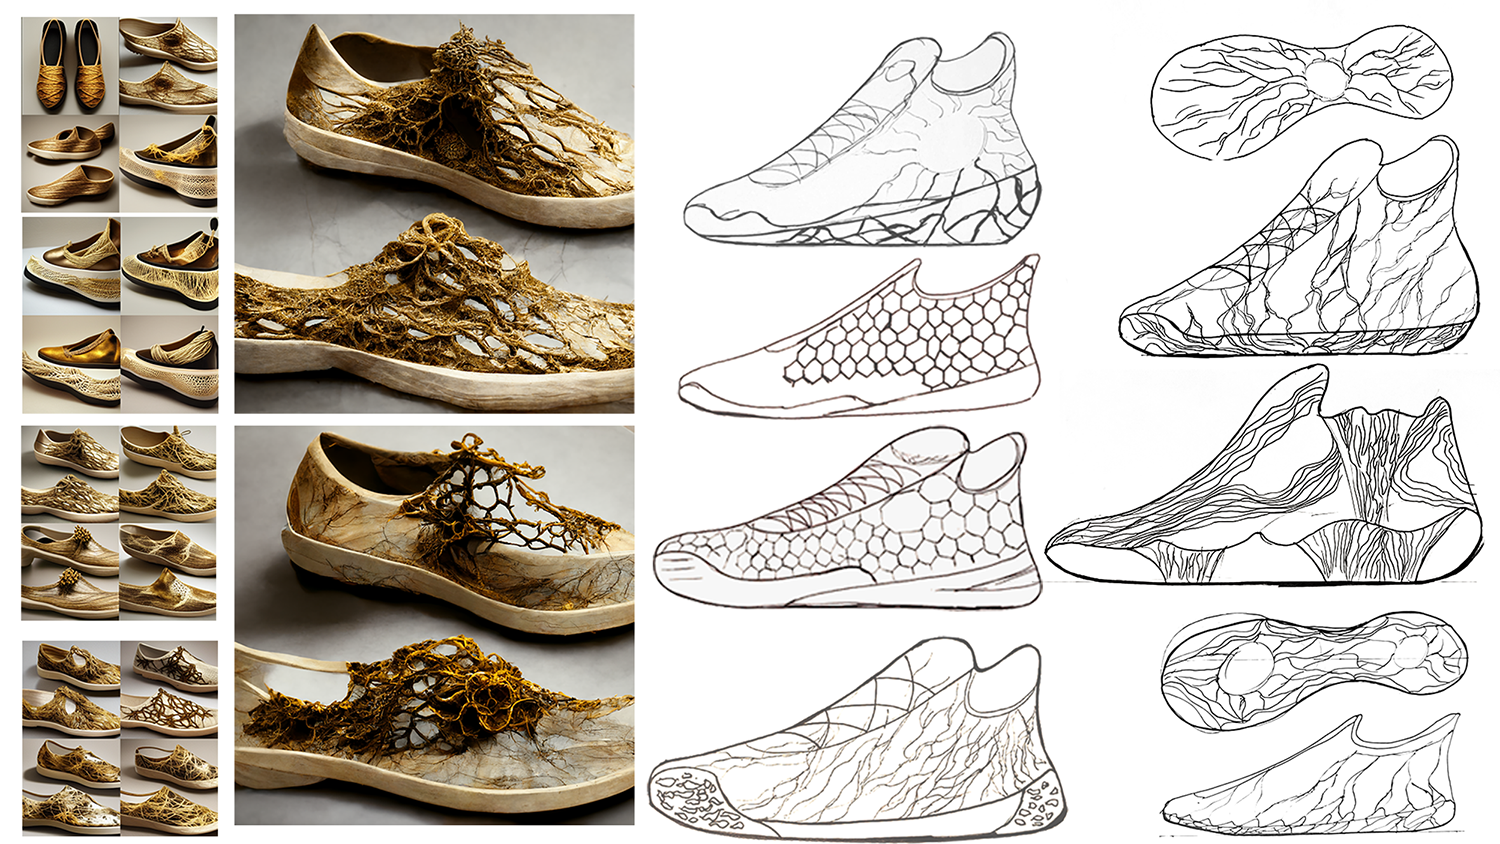 Sketches of footwear design.